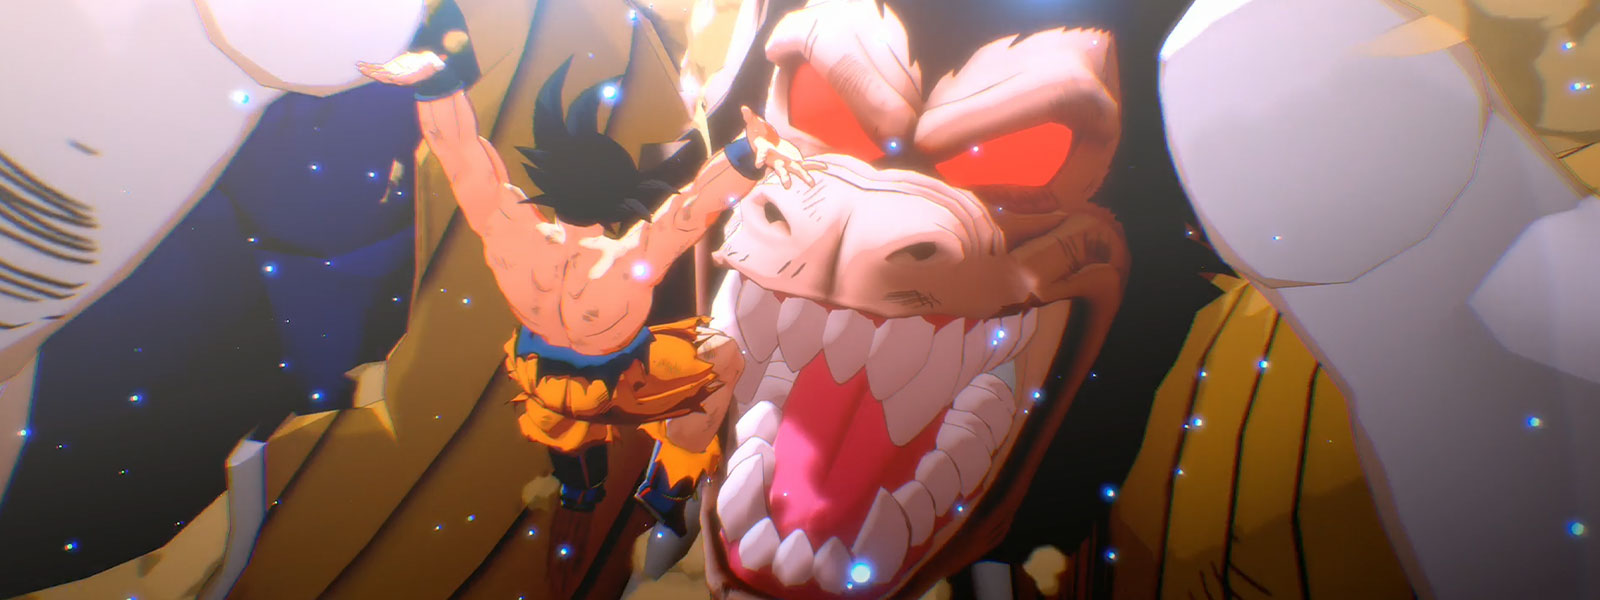 Goku free falls towards a giant monkey monster